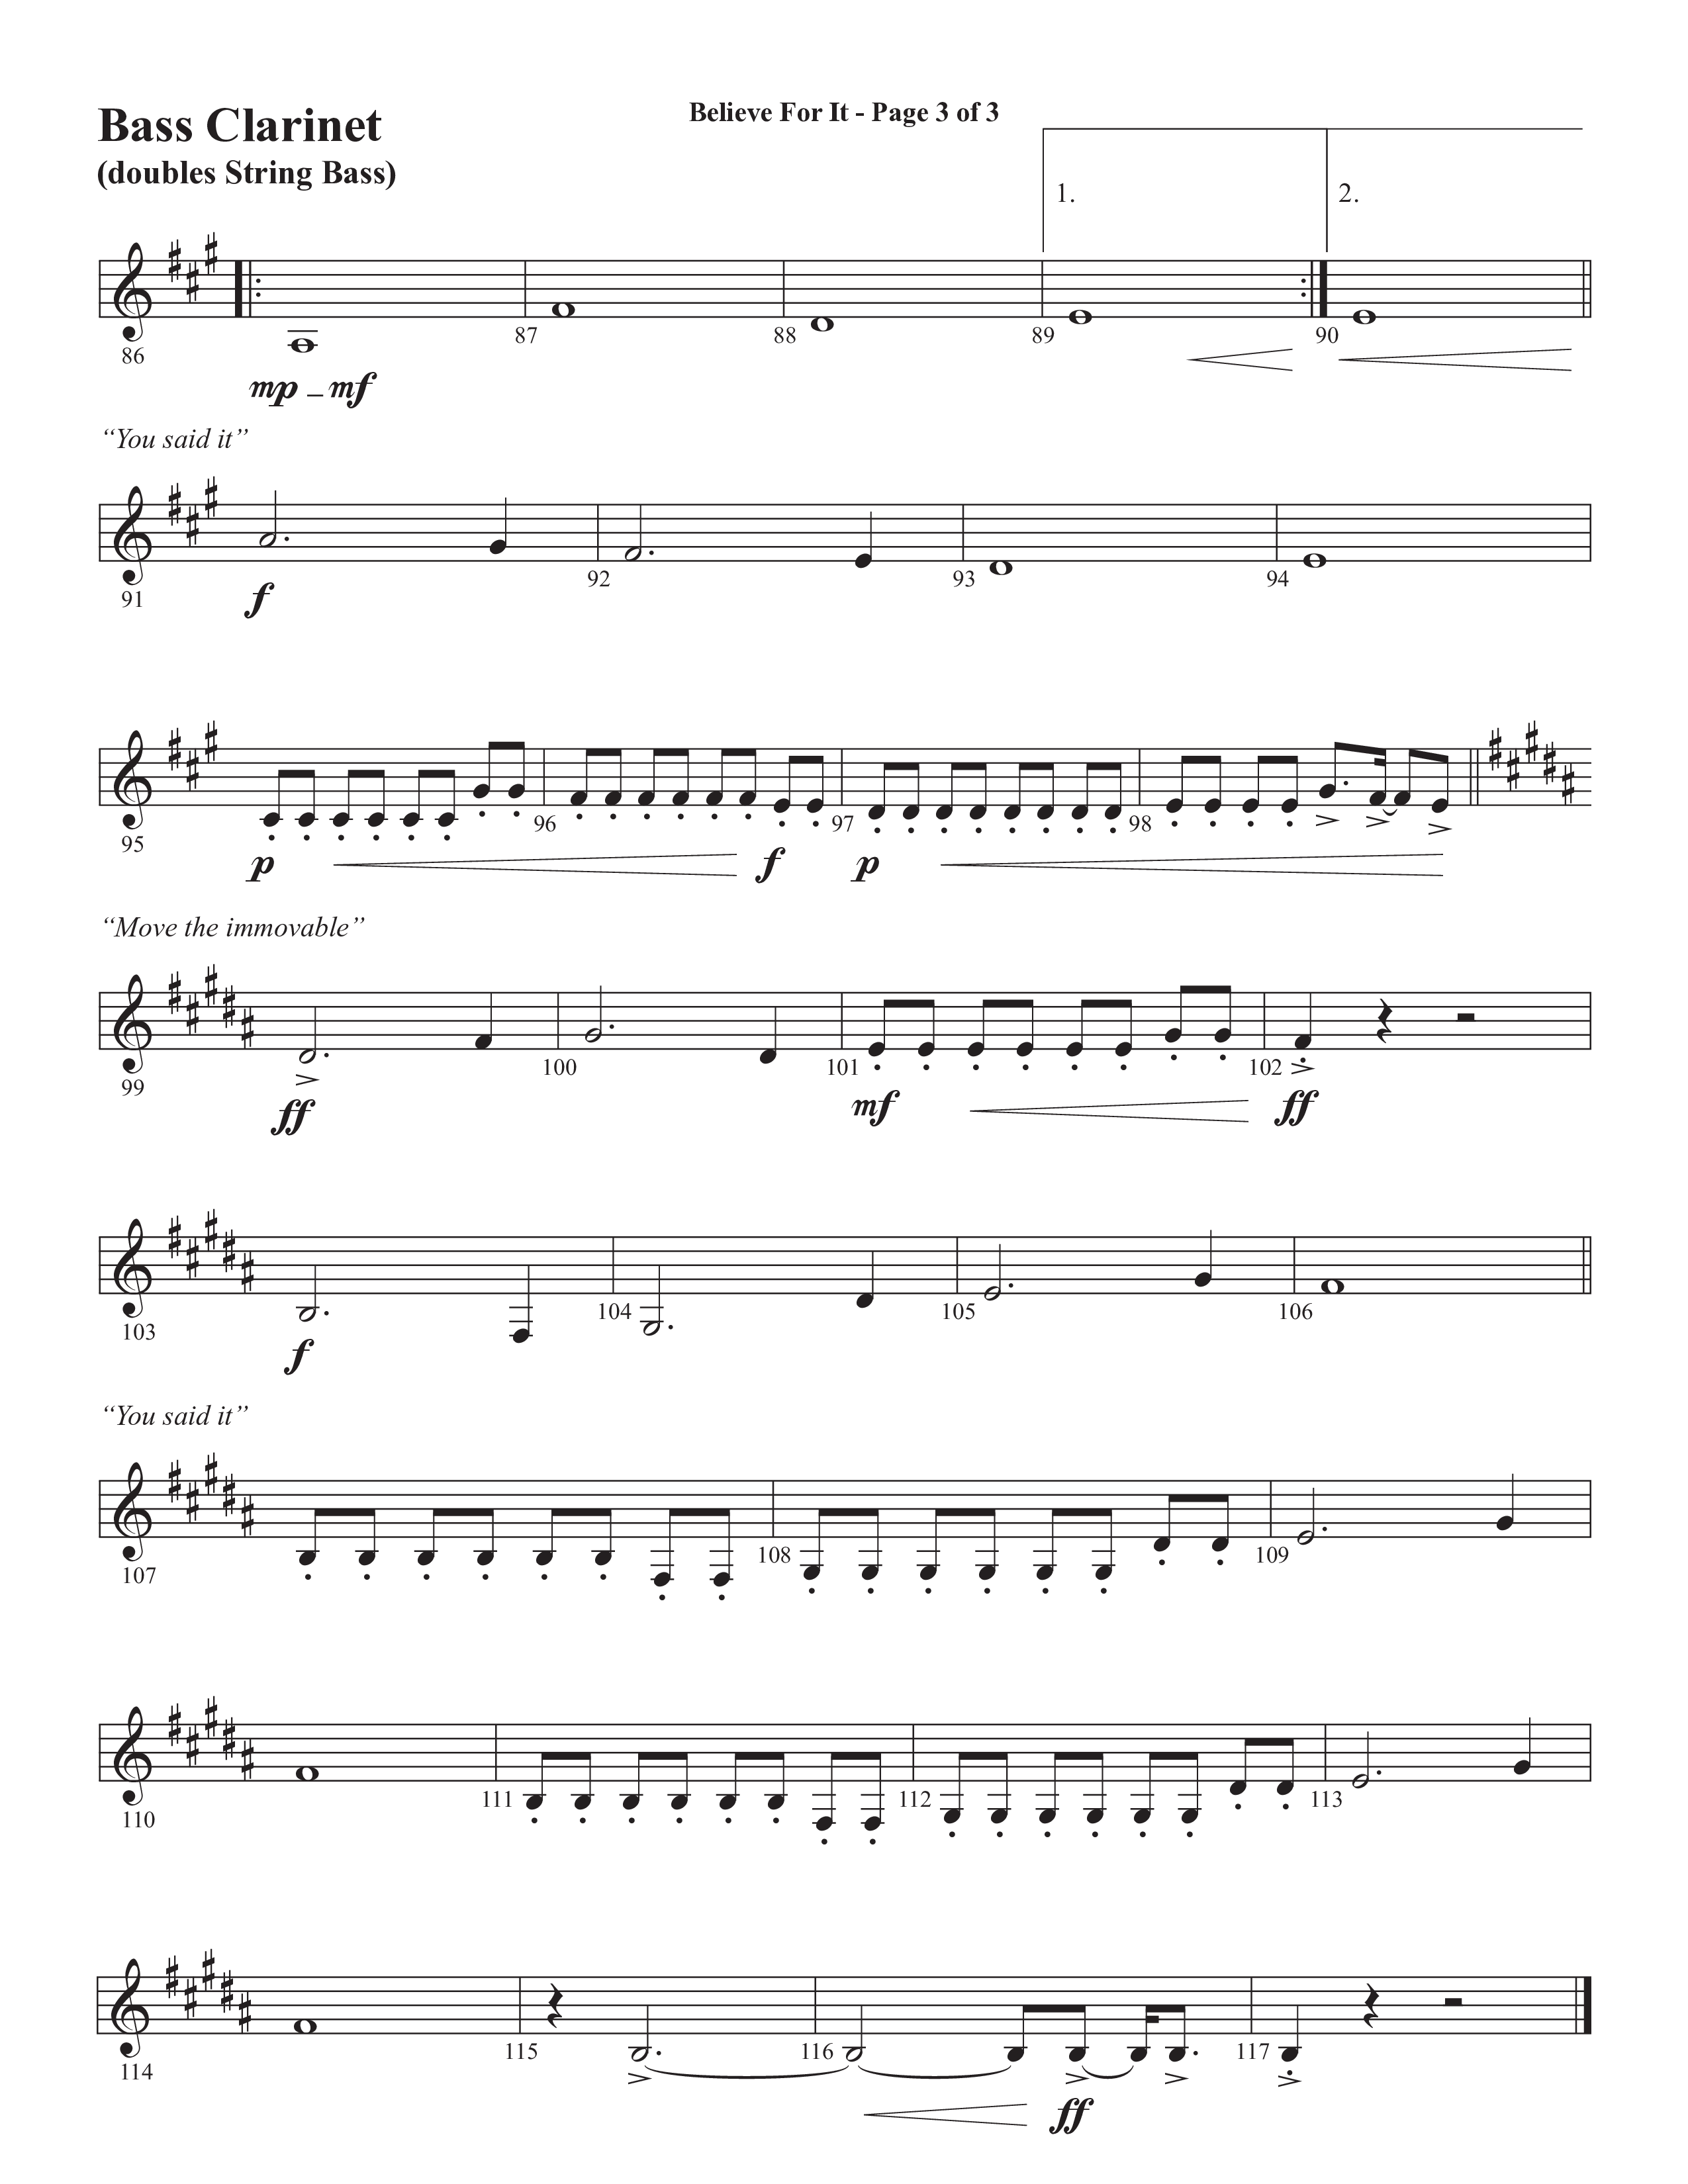 Believe For It (Choral Anthem SATB) Bass Clarinet (Semsen Music / Arr. Phil Nitz)